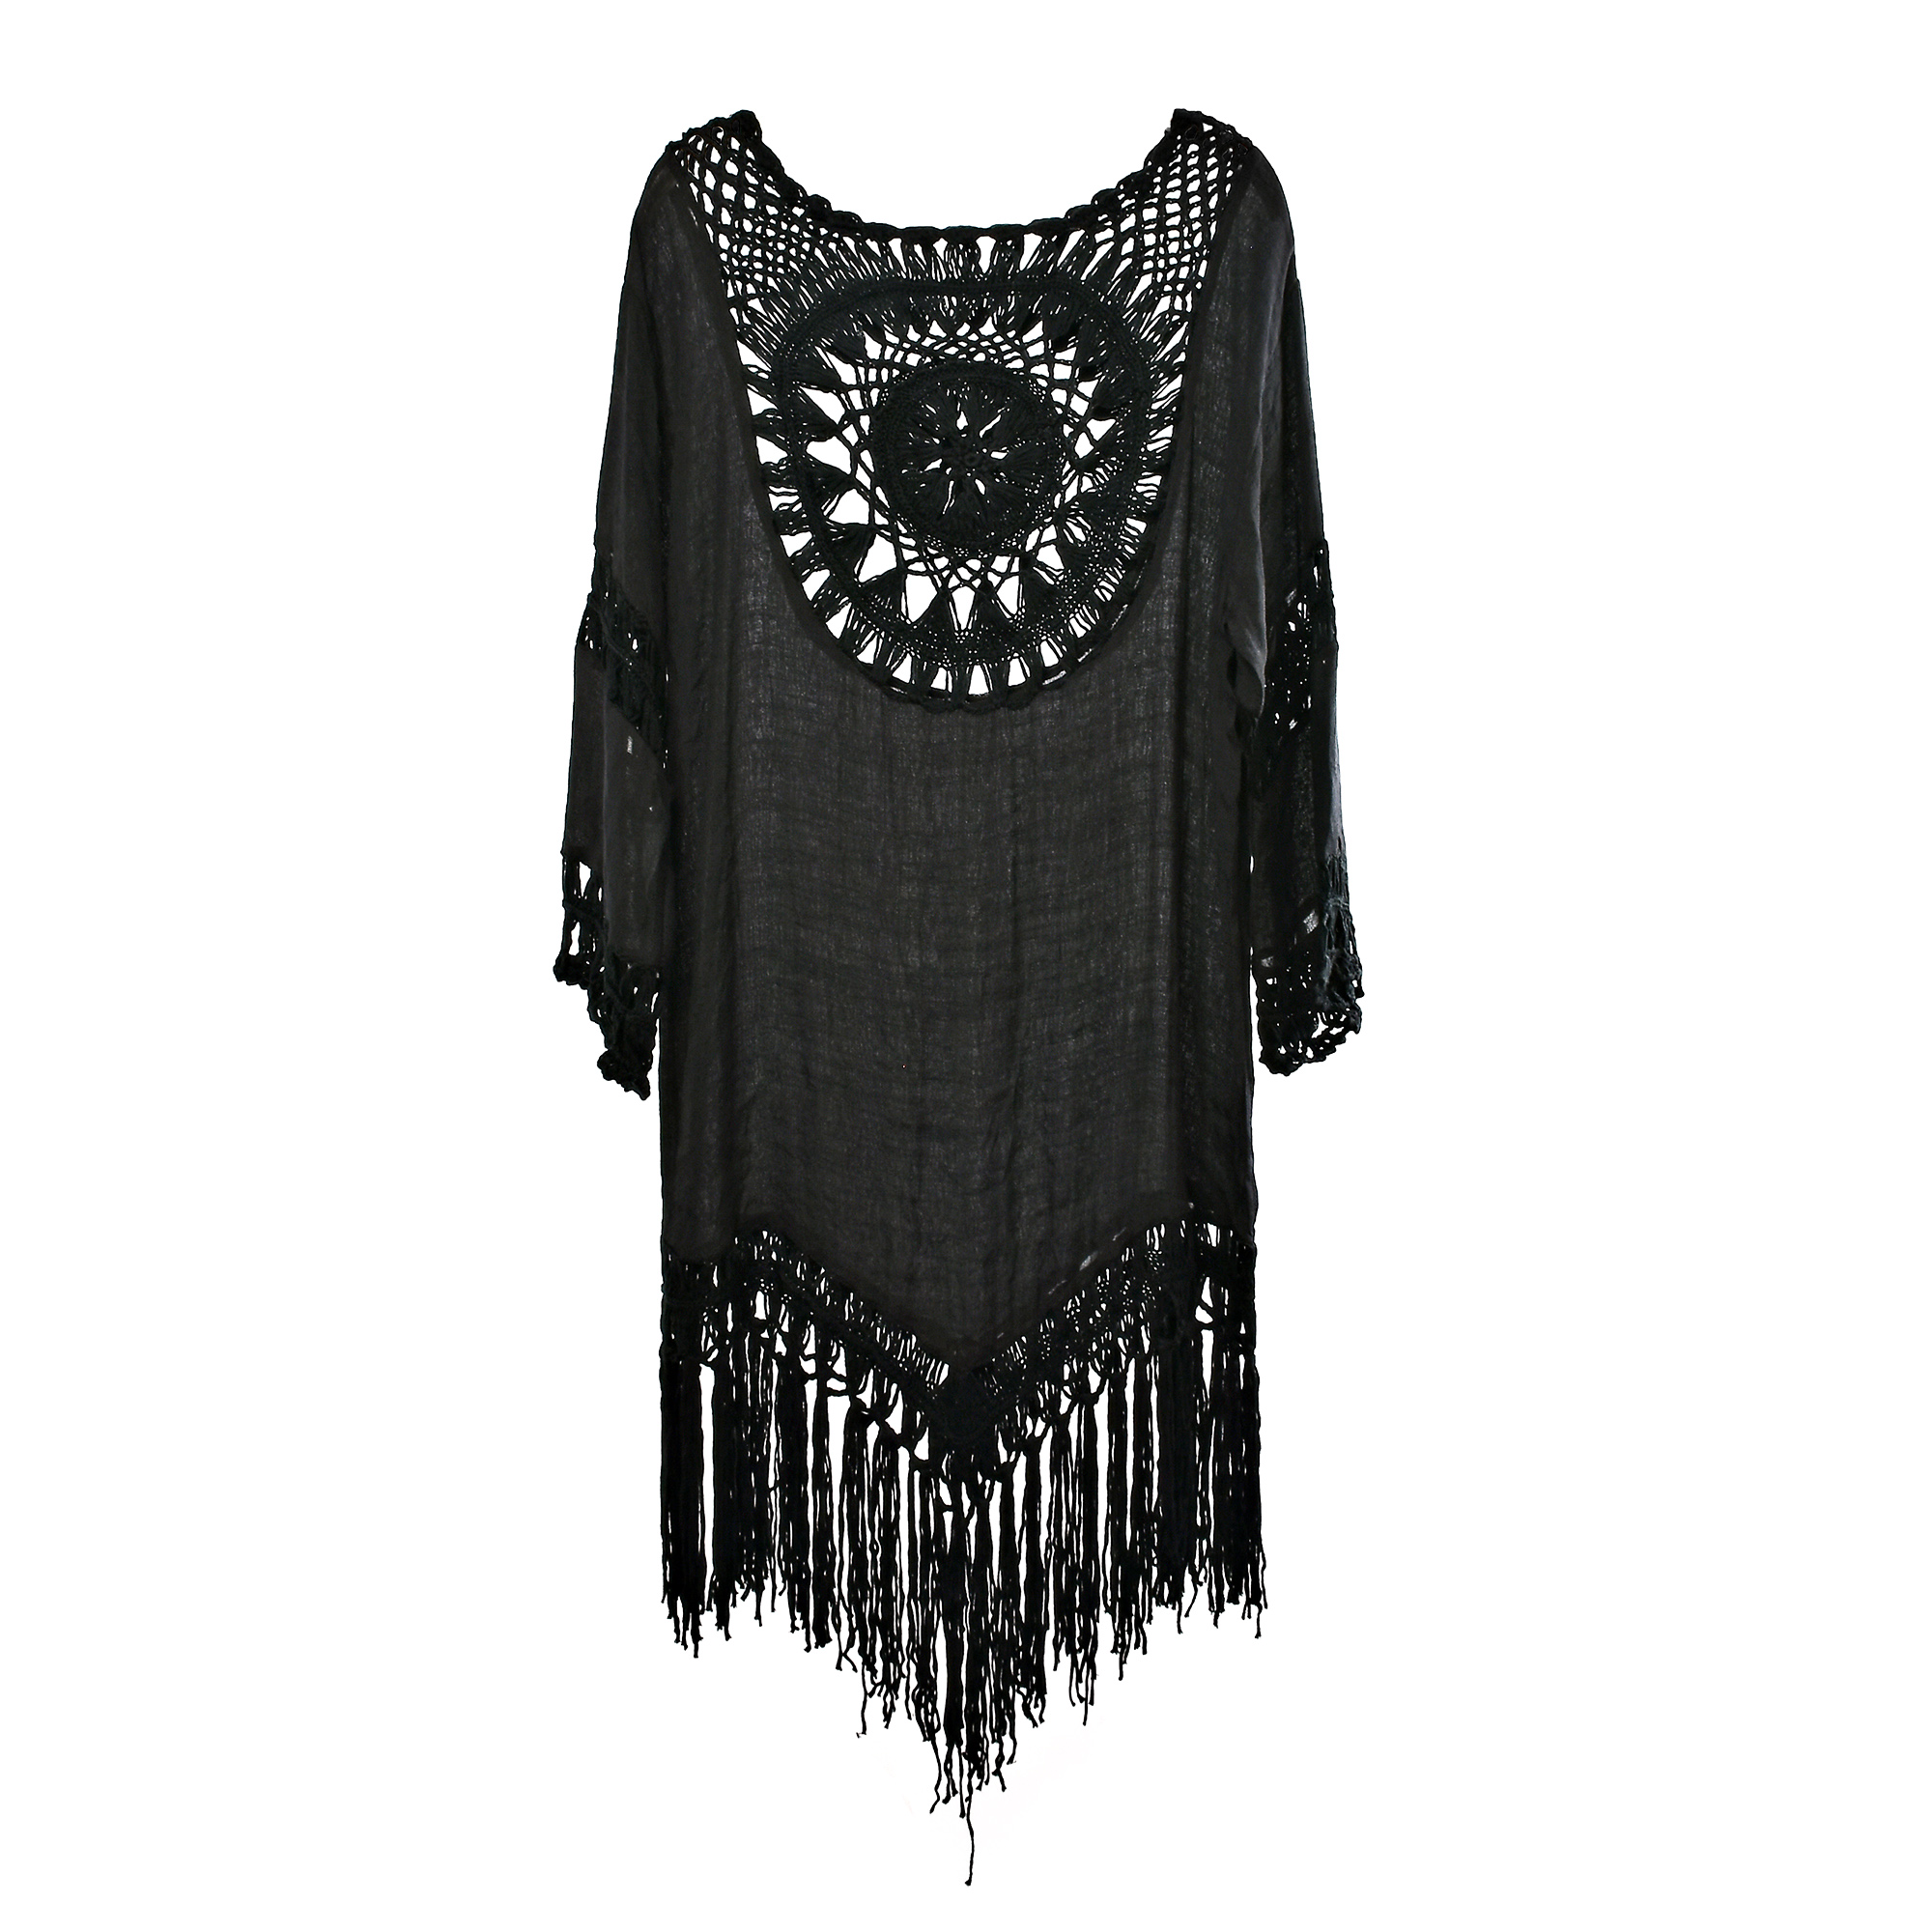 Stylish Black Sun Crochet & Fringe Beach Dress or Bikini Cover up